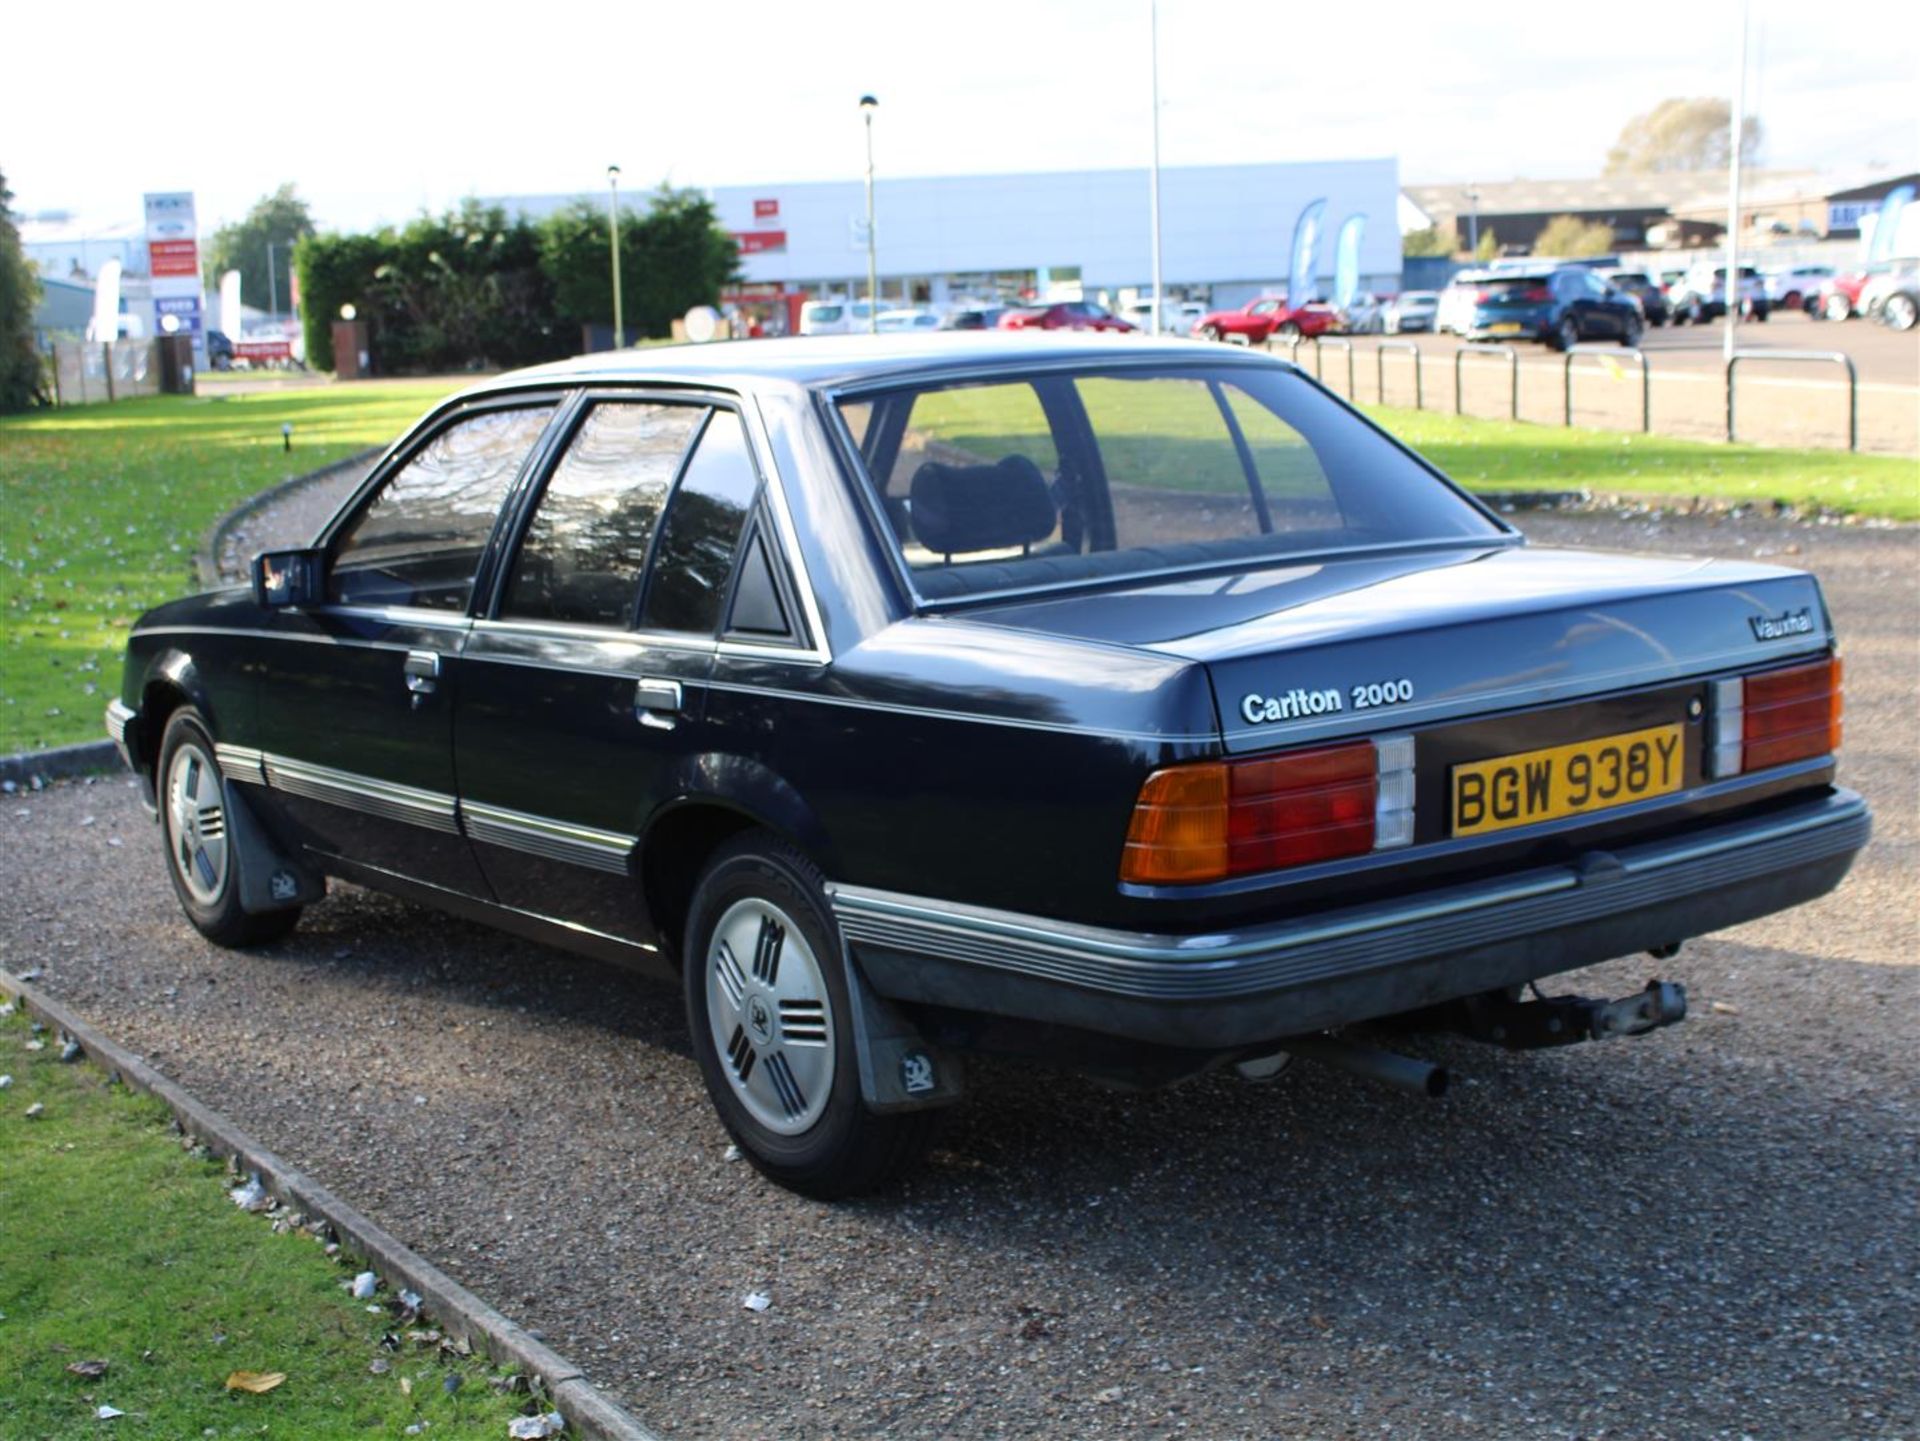 1983 Vauxhall Carlton 2.0 S GL - Image 7 of 27